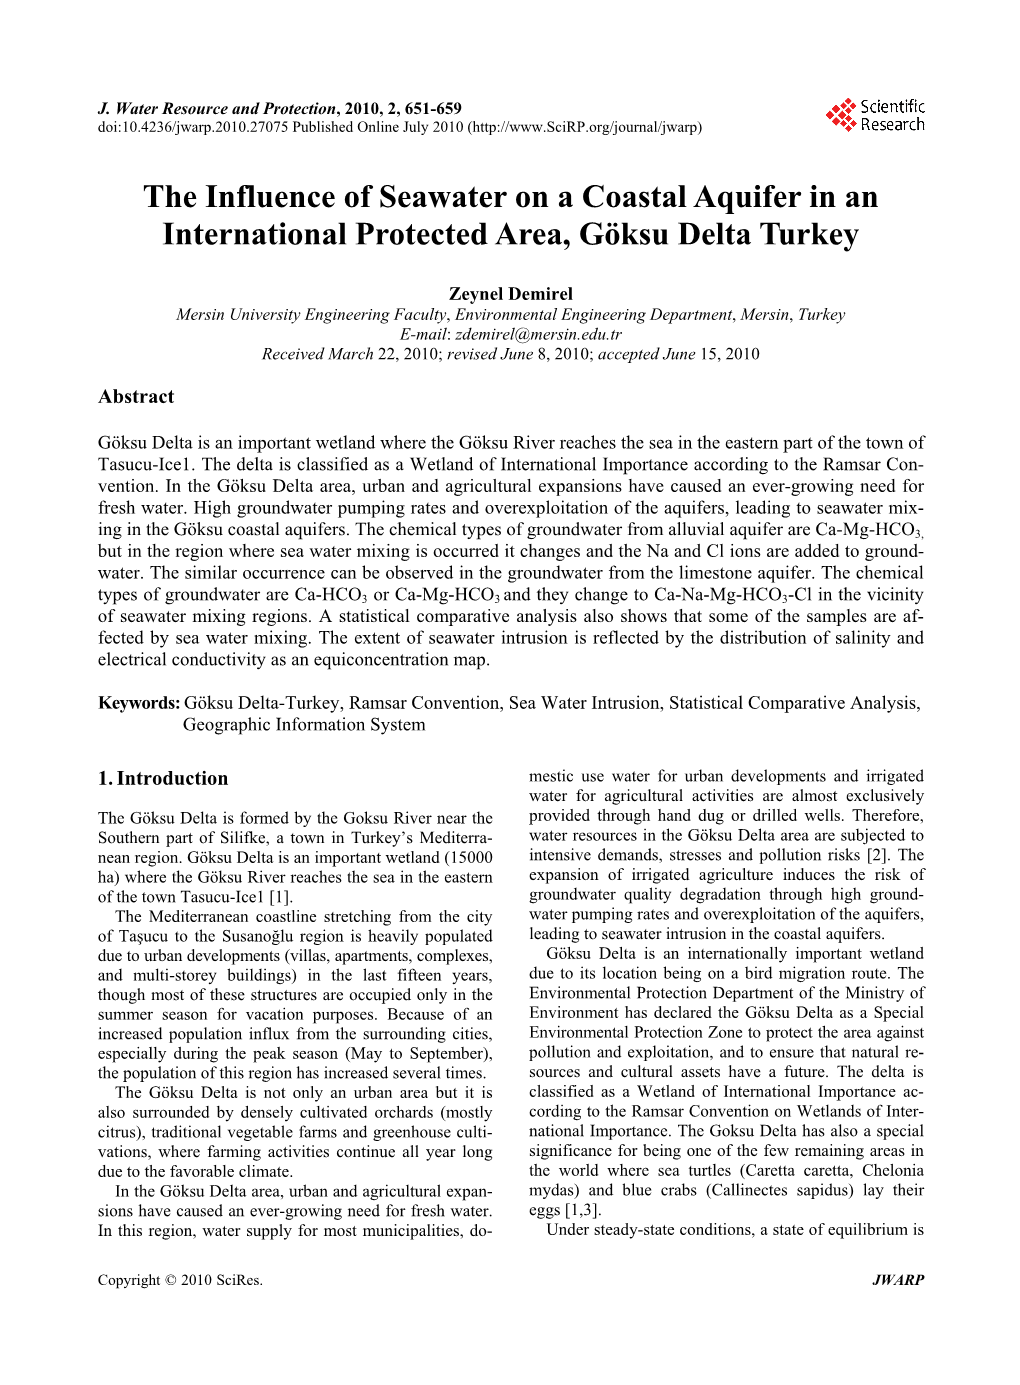 The Influence of Seawater on a Coastal Aquifer in an International Protected Area, Göksu Delta Turkey